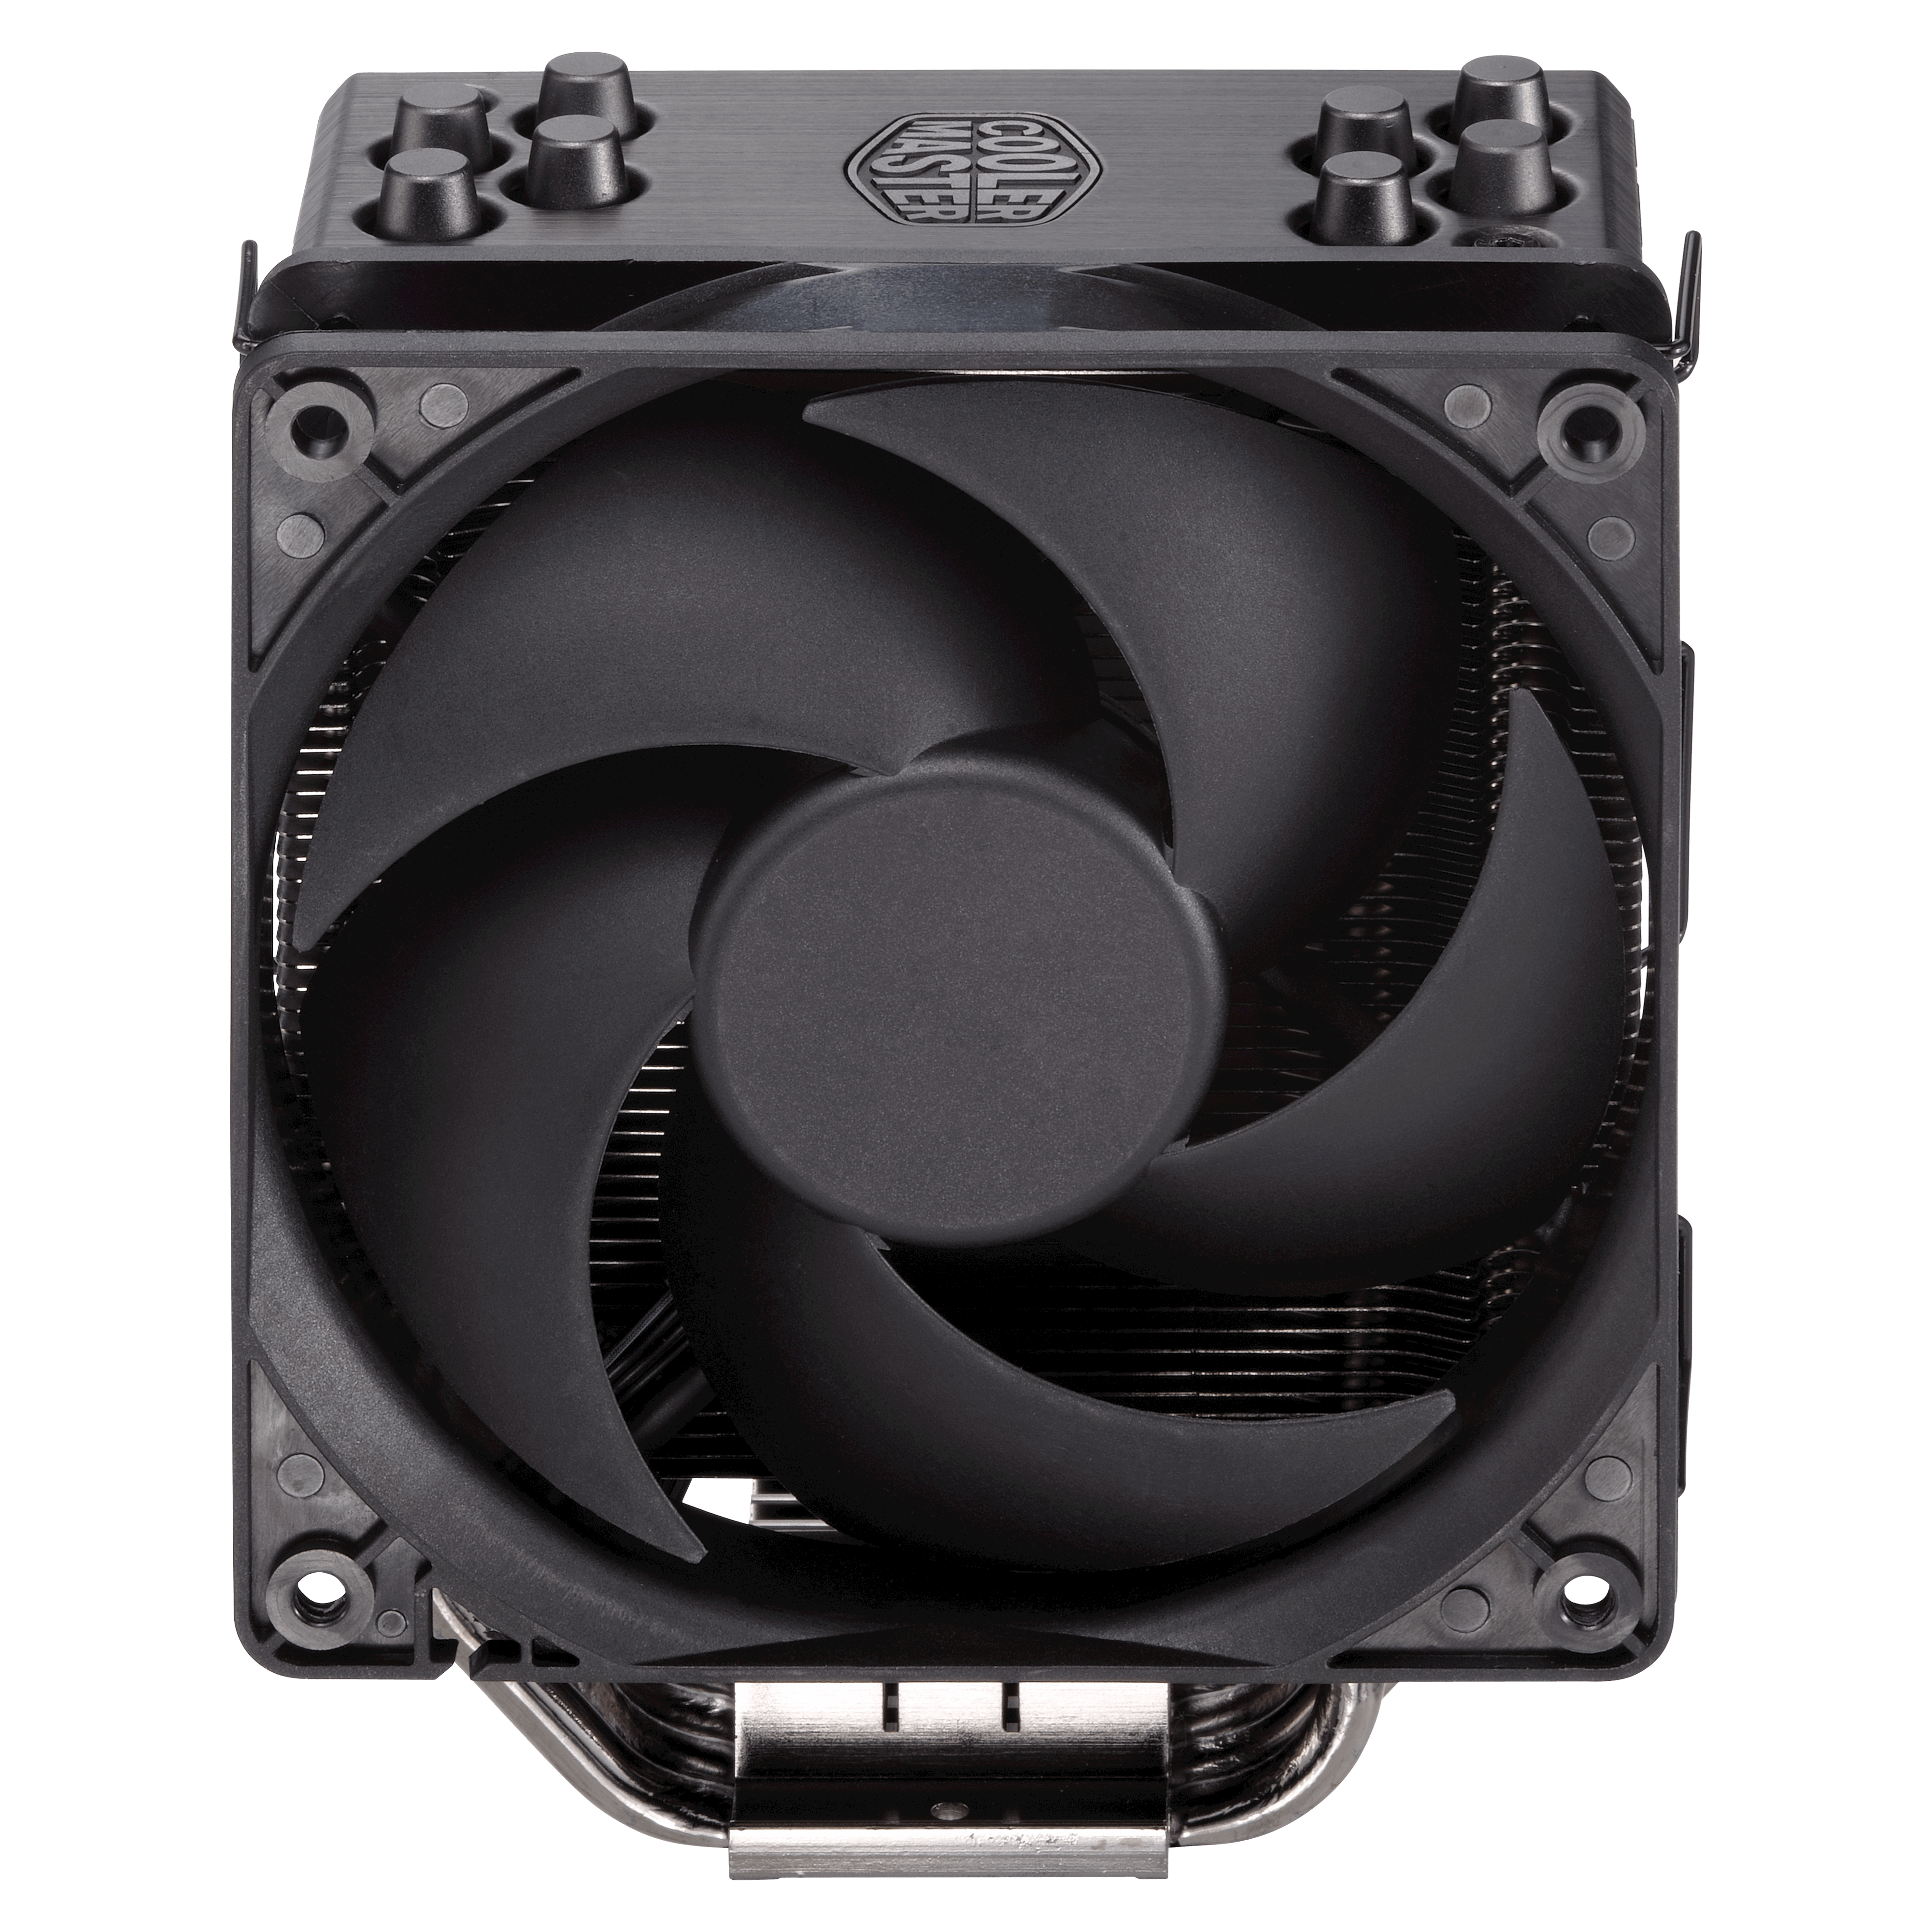 Hyper 212 Black Edition CPU Air Cooler | Cooler Master